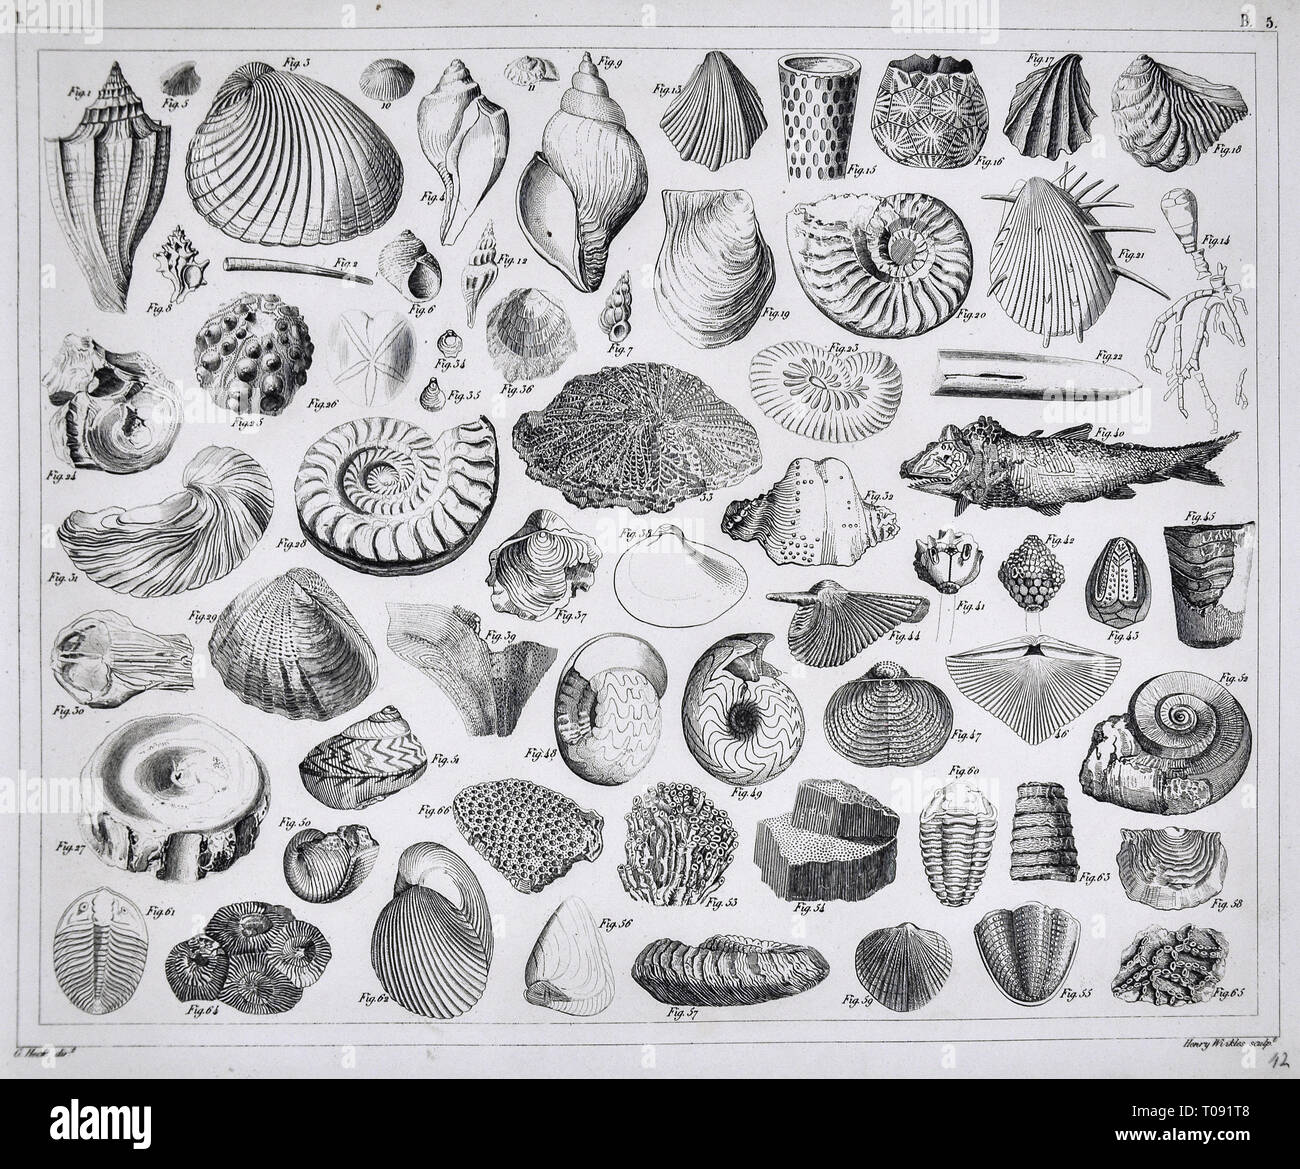 1849 Bilder Atlas Print - Prehistoric Fossils from the Paleozoic Period including Brachiopod Sea Shells, Trilobite, Ammonites, Coral and other Marine Stock Photo - Alamy